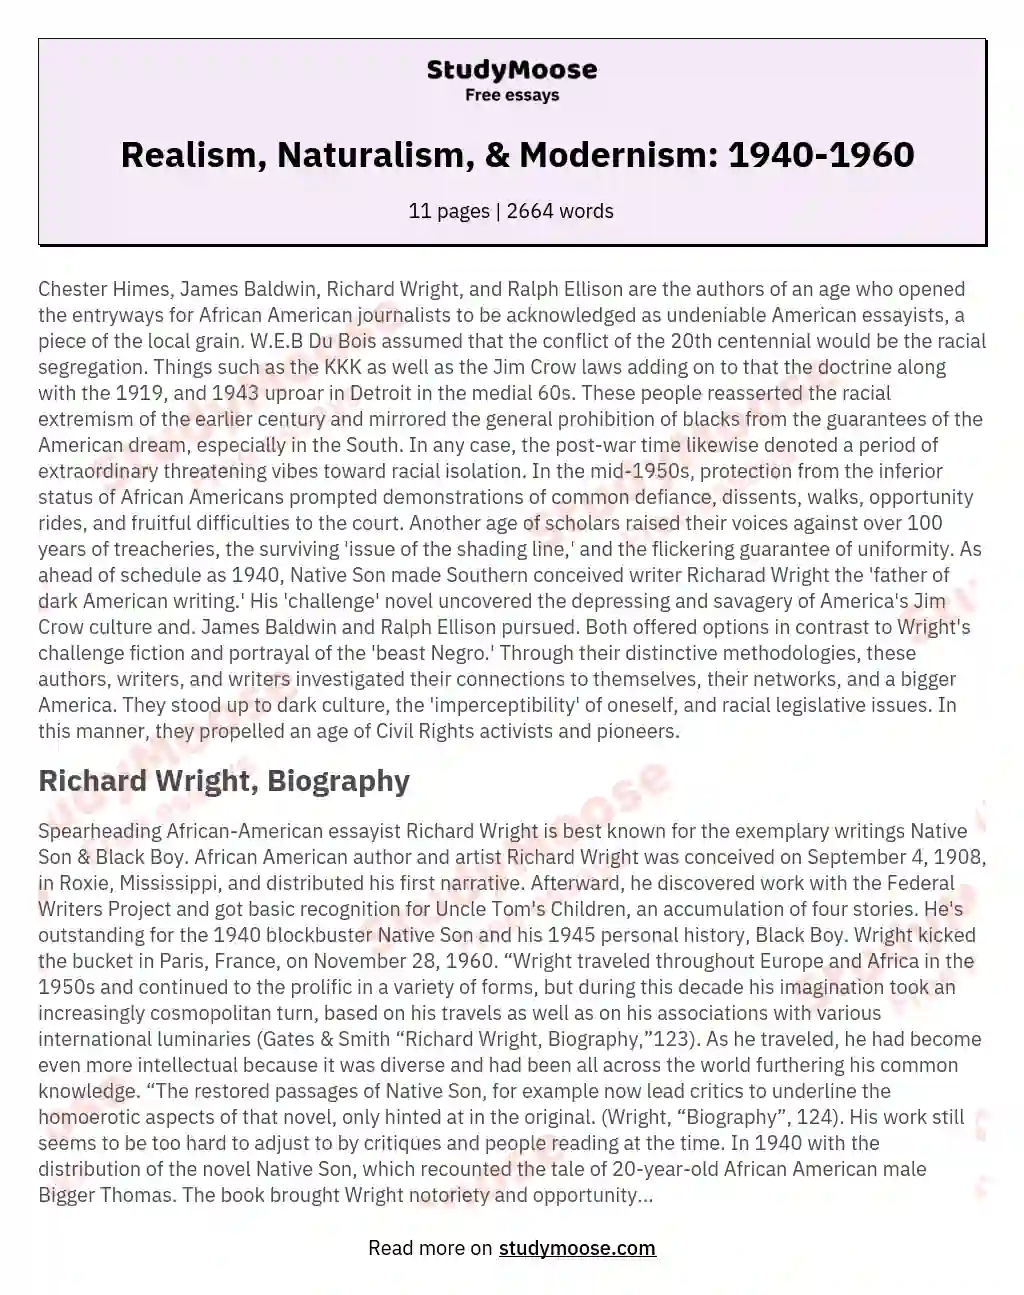  Realism, Naturalism, & Modernism: 1940-1960